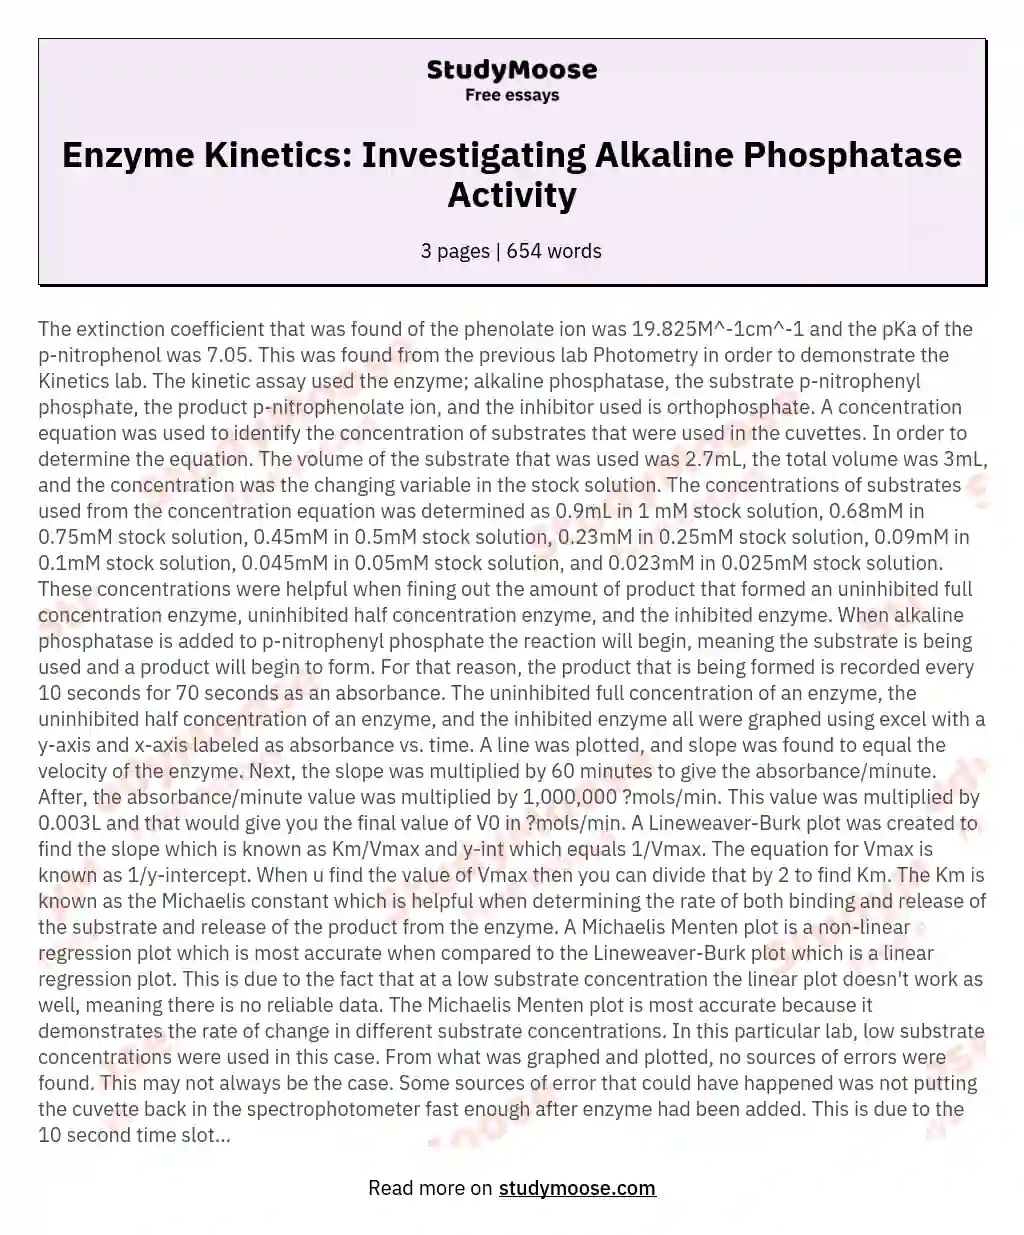 Enzyme Kinetics: Investigating Alkaline Phosphatase Activity essay